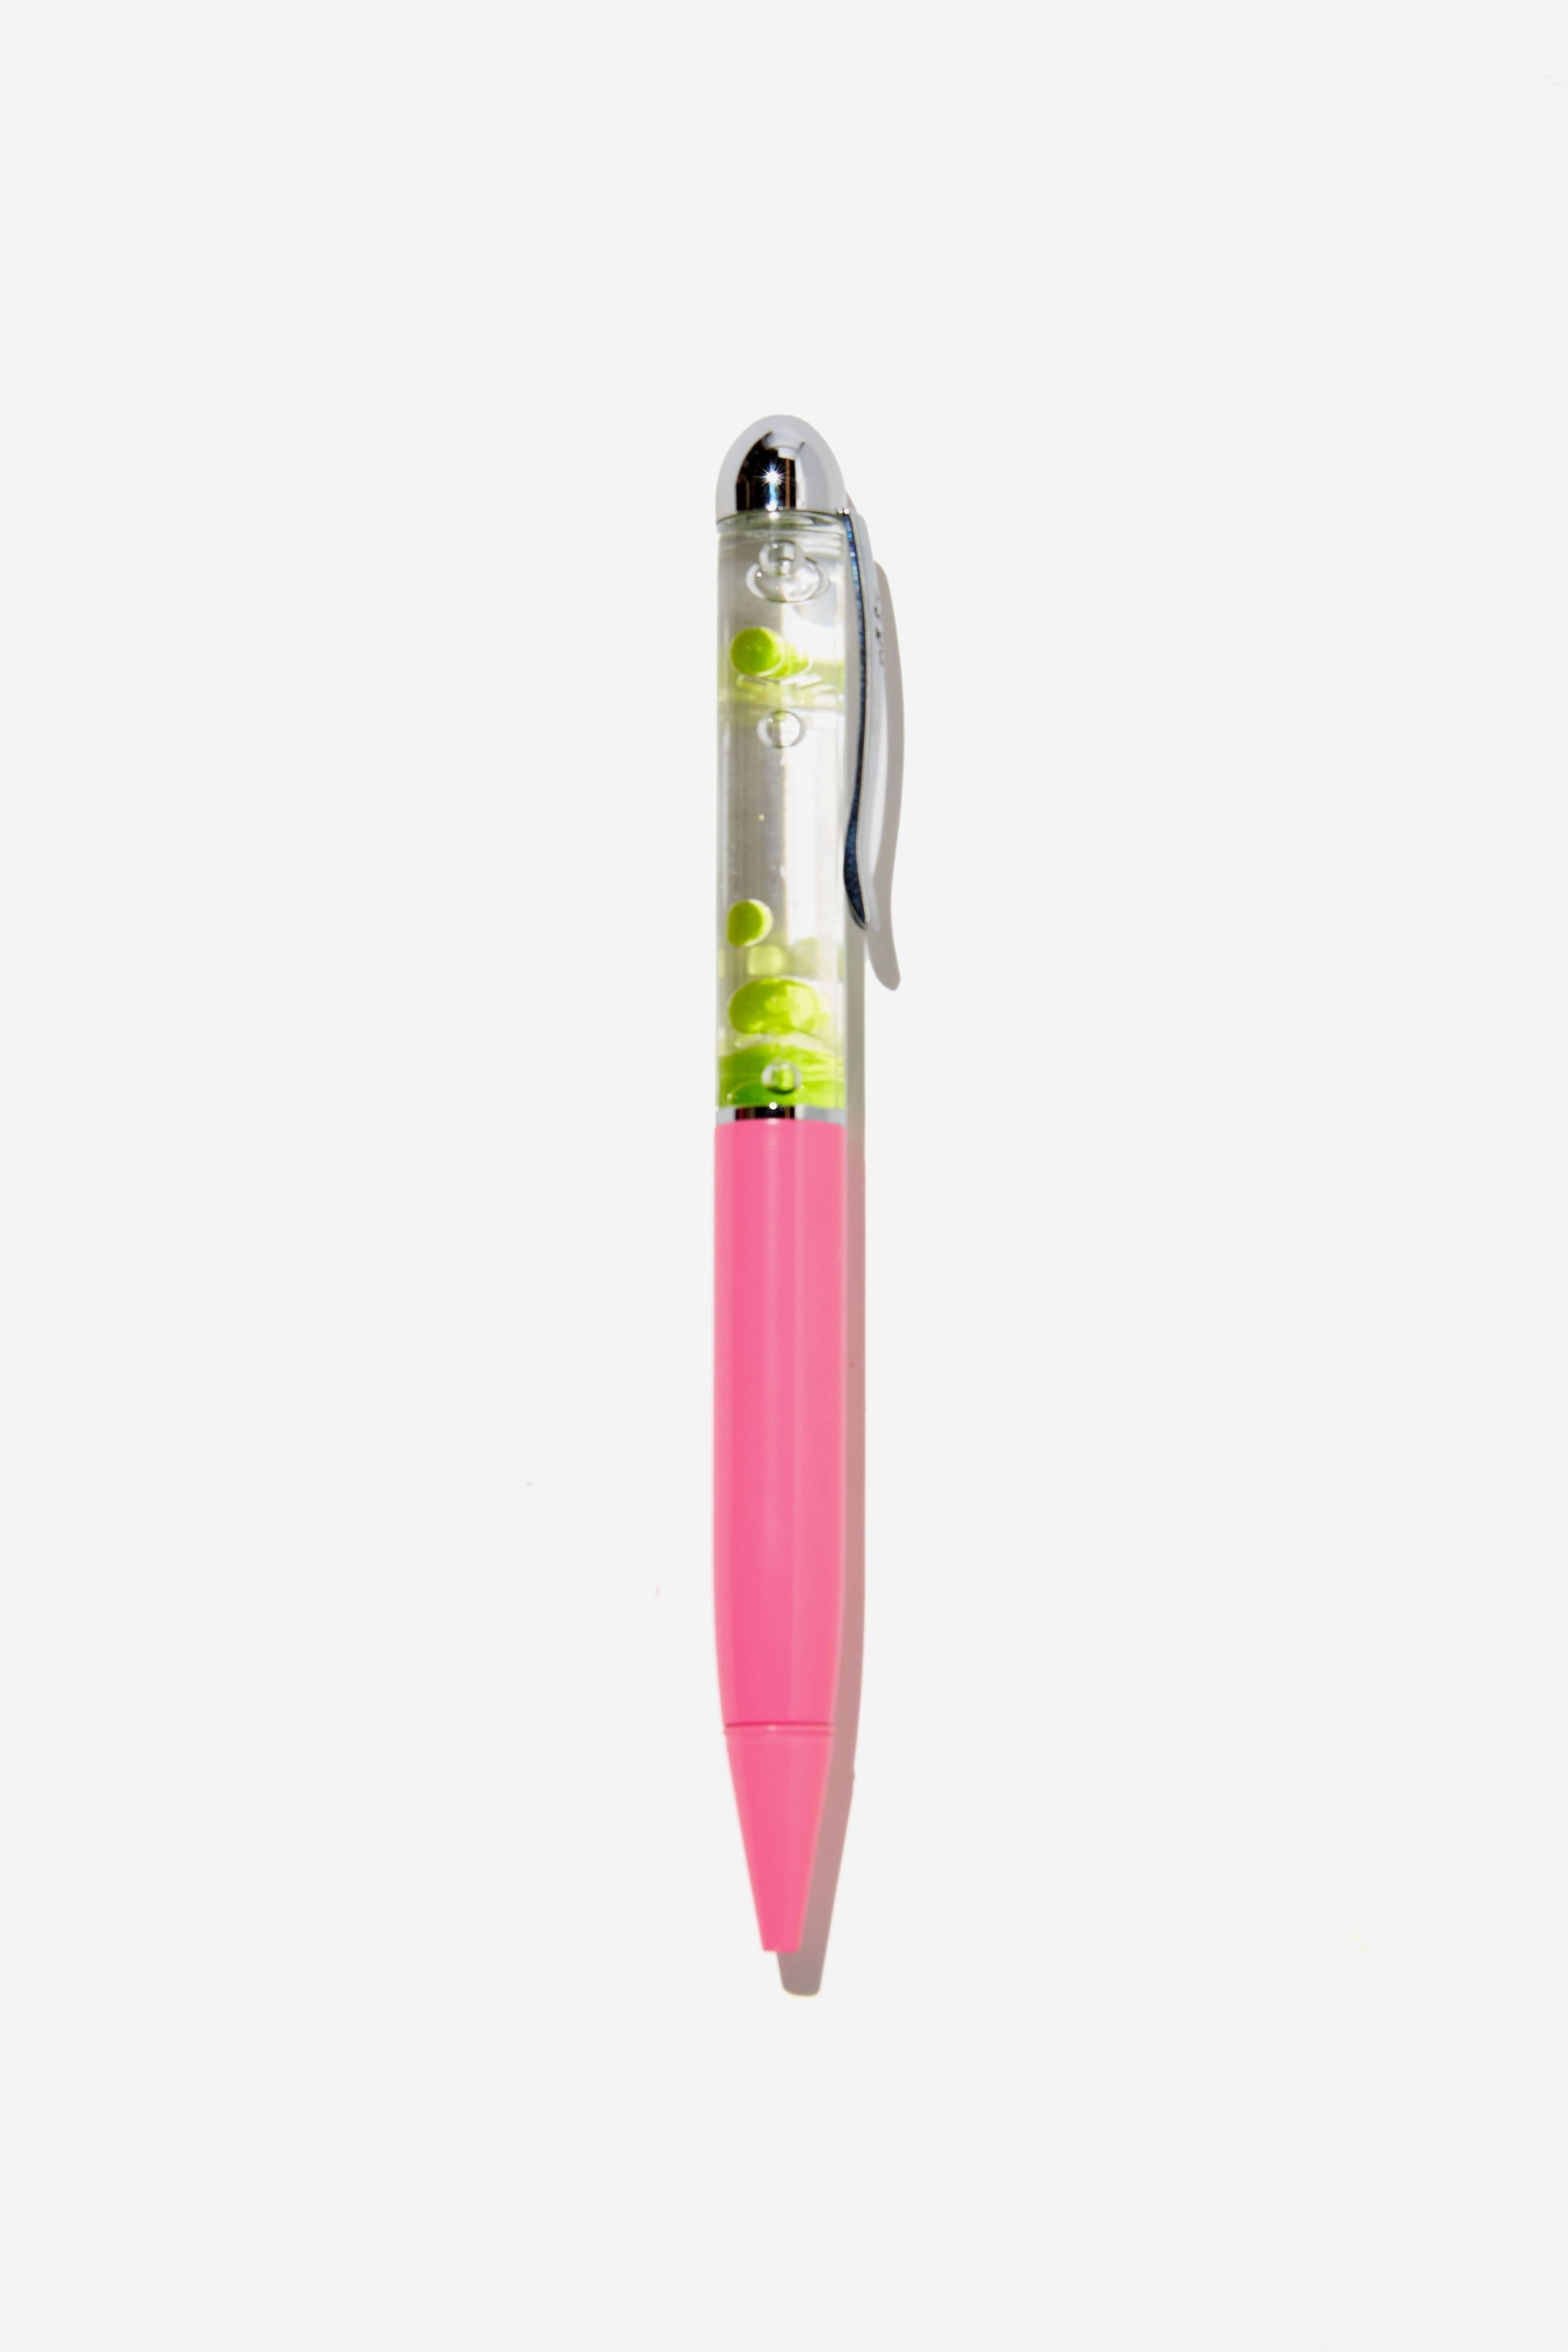 Typo - Lava Pen - Ultra neon pink & green